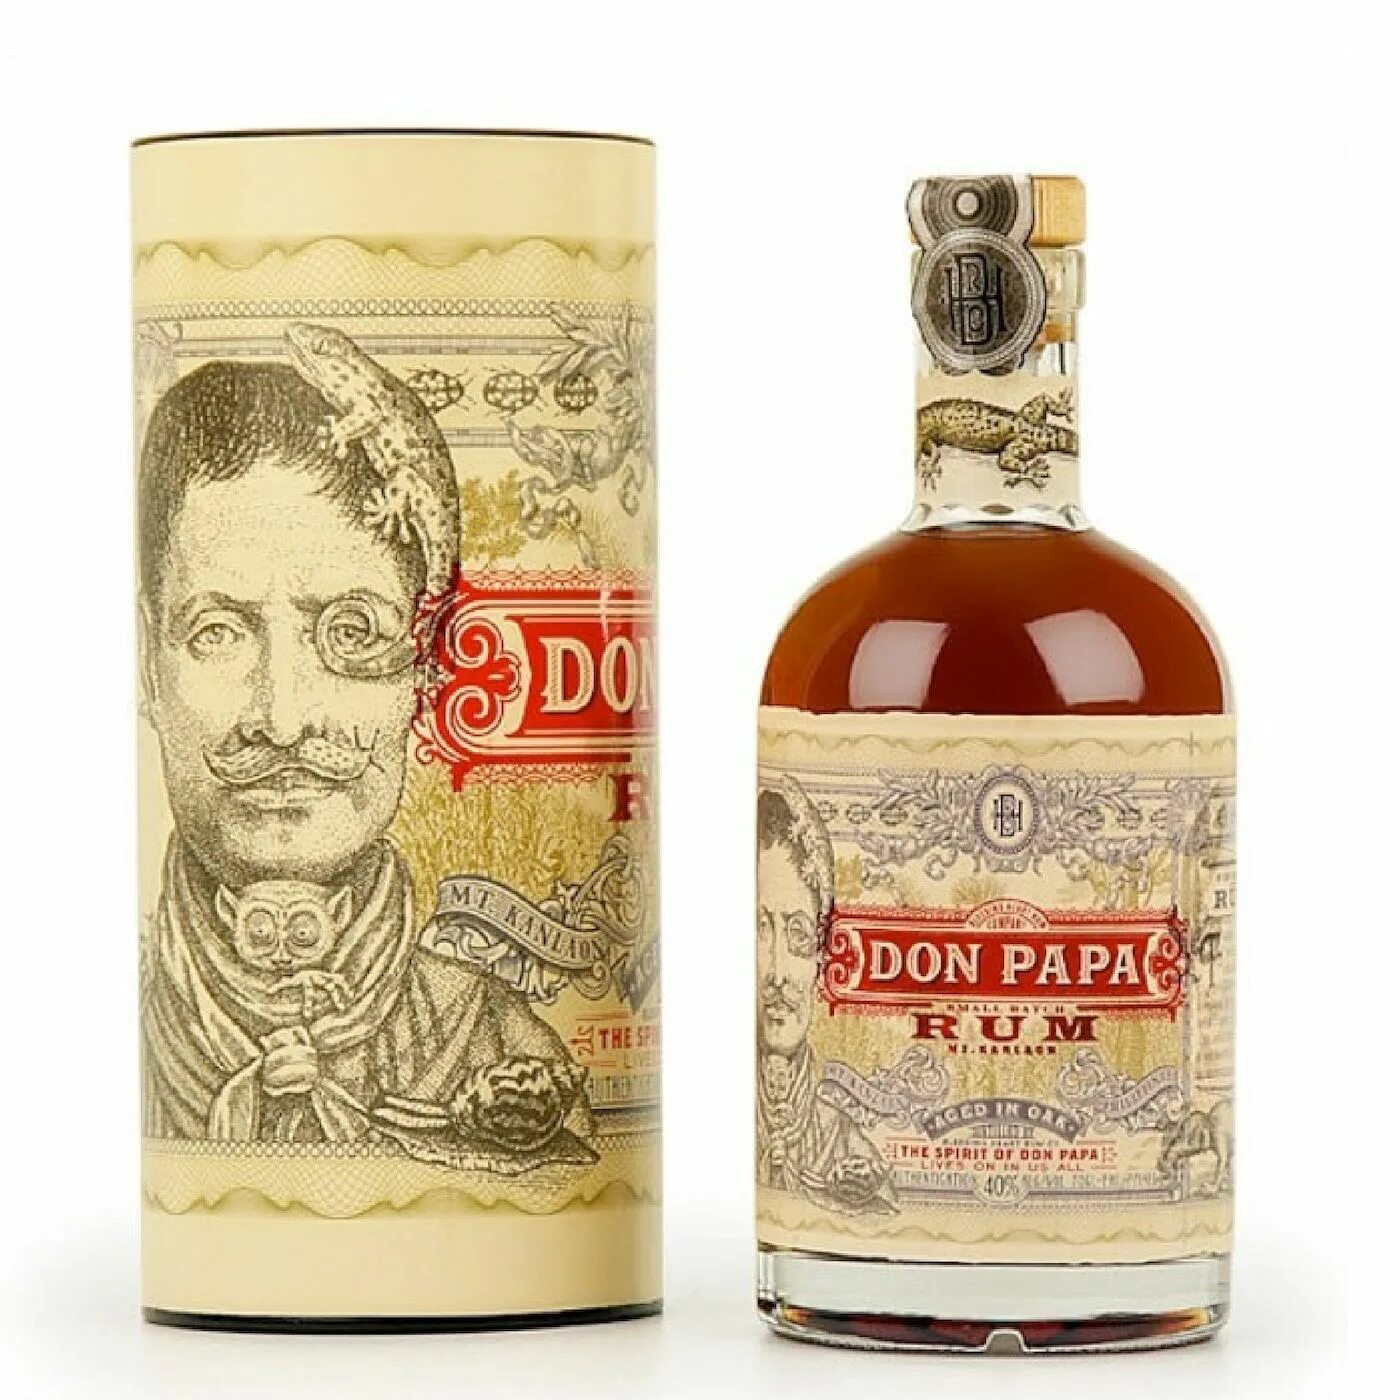 Don Papa rum. Ром папа Ром. Виски Дон папа.